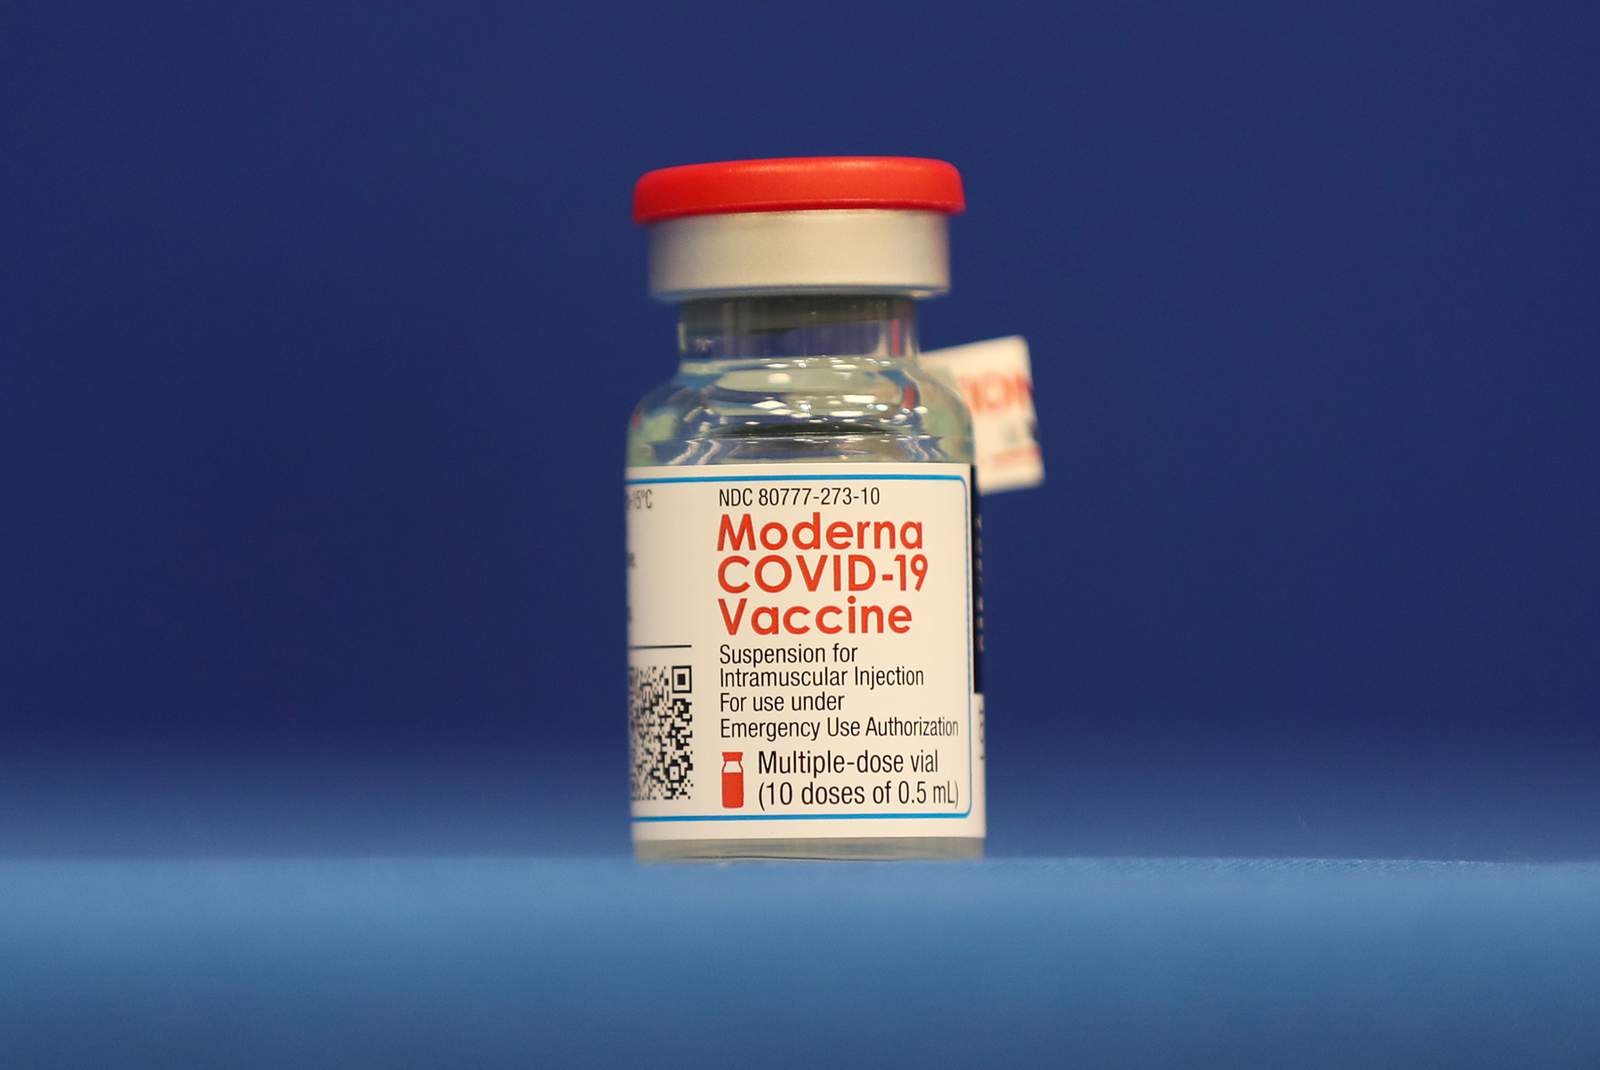 COVID-19 vaccine shots to start next week at some Winn-Dixie, Harveys locations